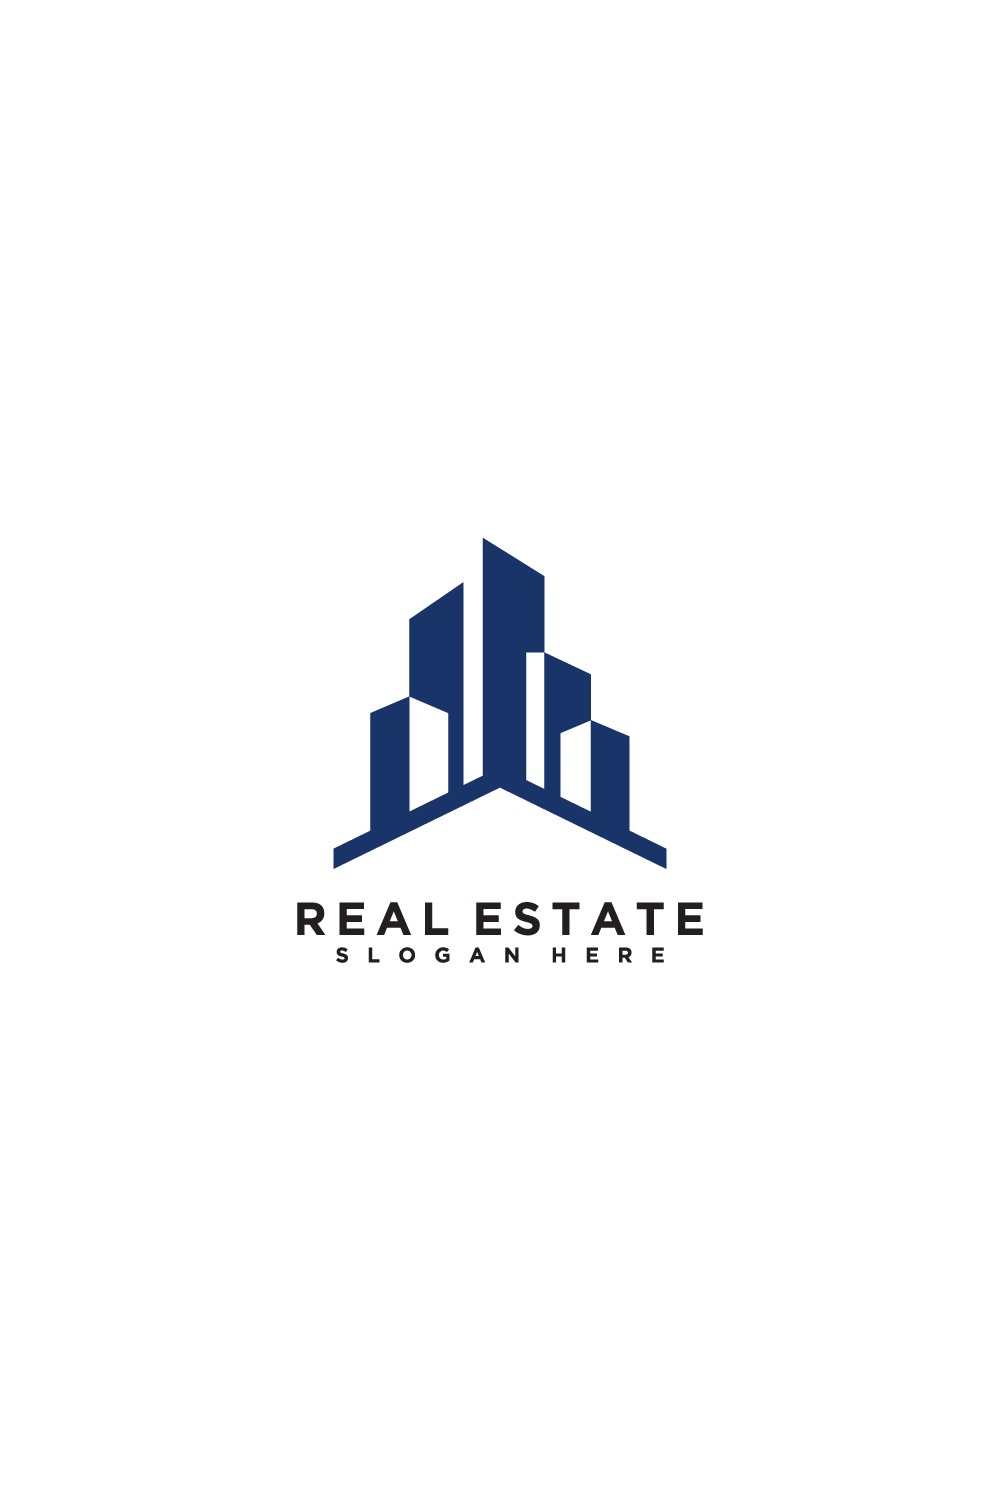 Buildings real estate logo design pinterest preview image.